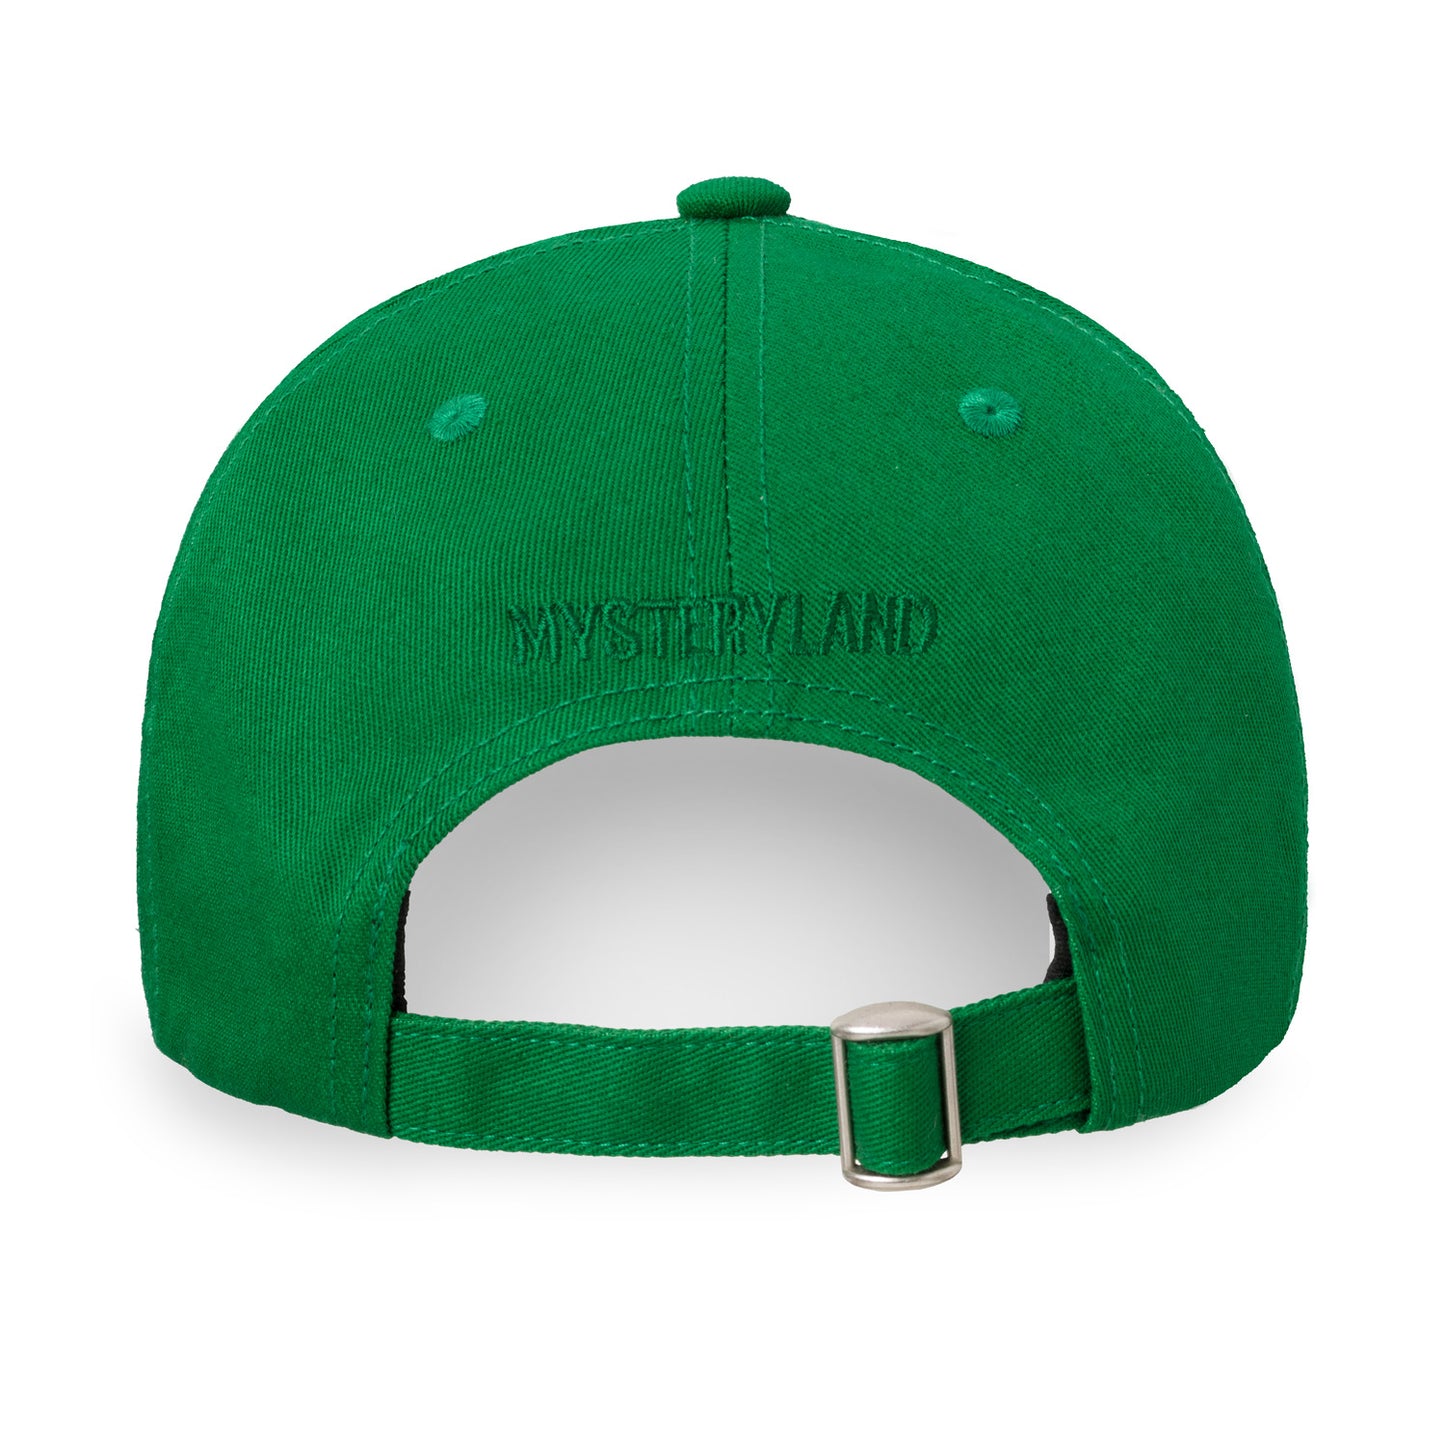 Baseball cap green